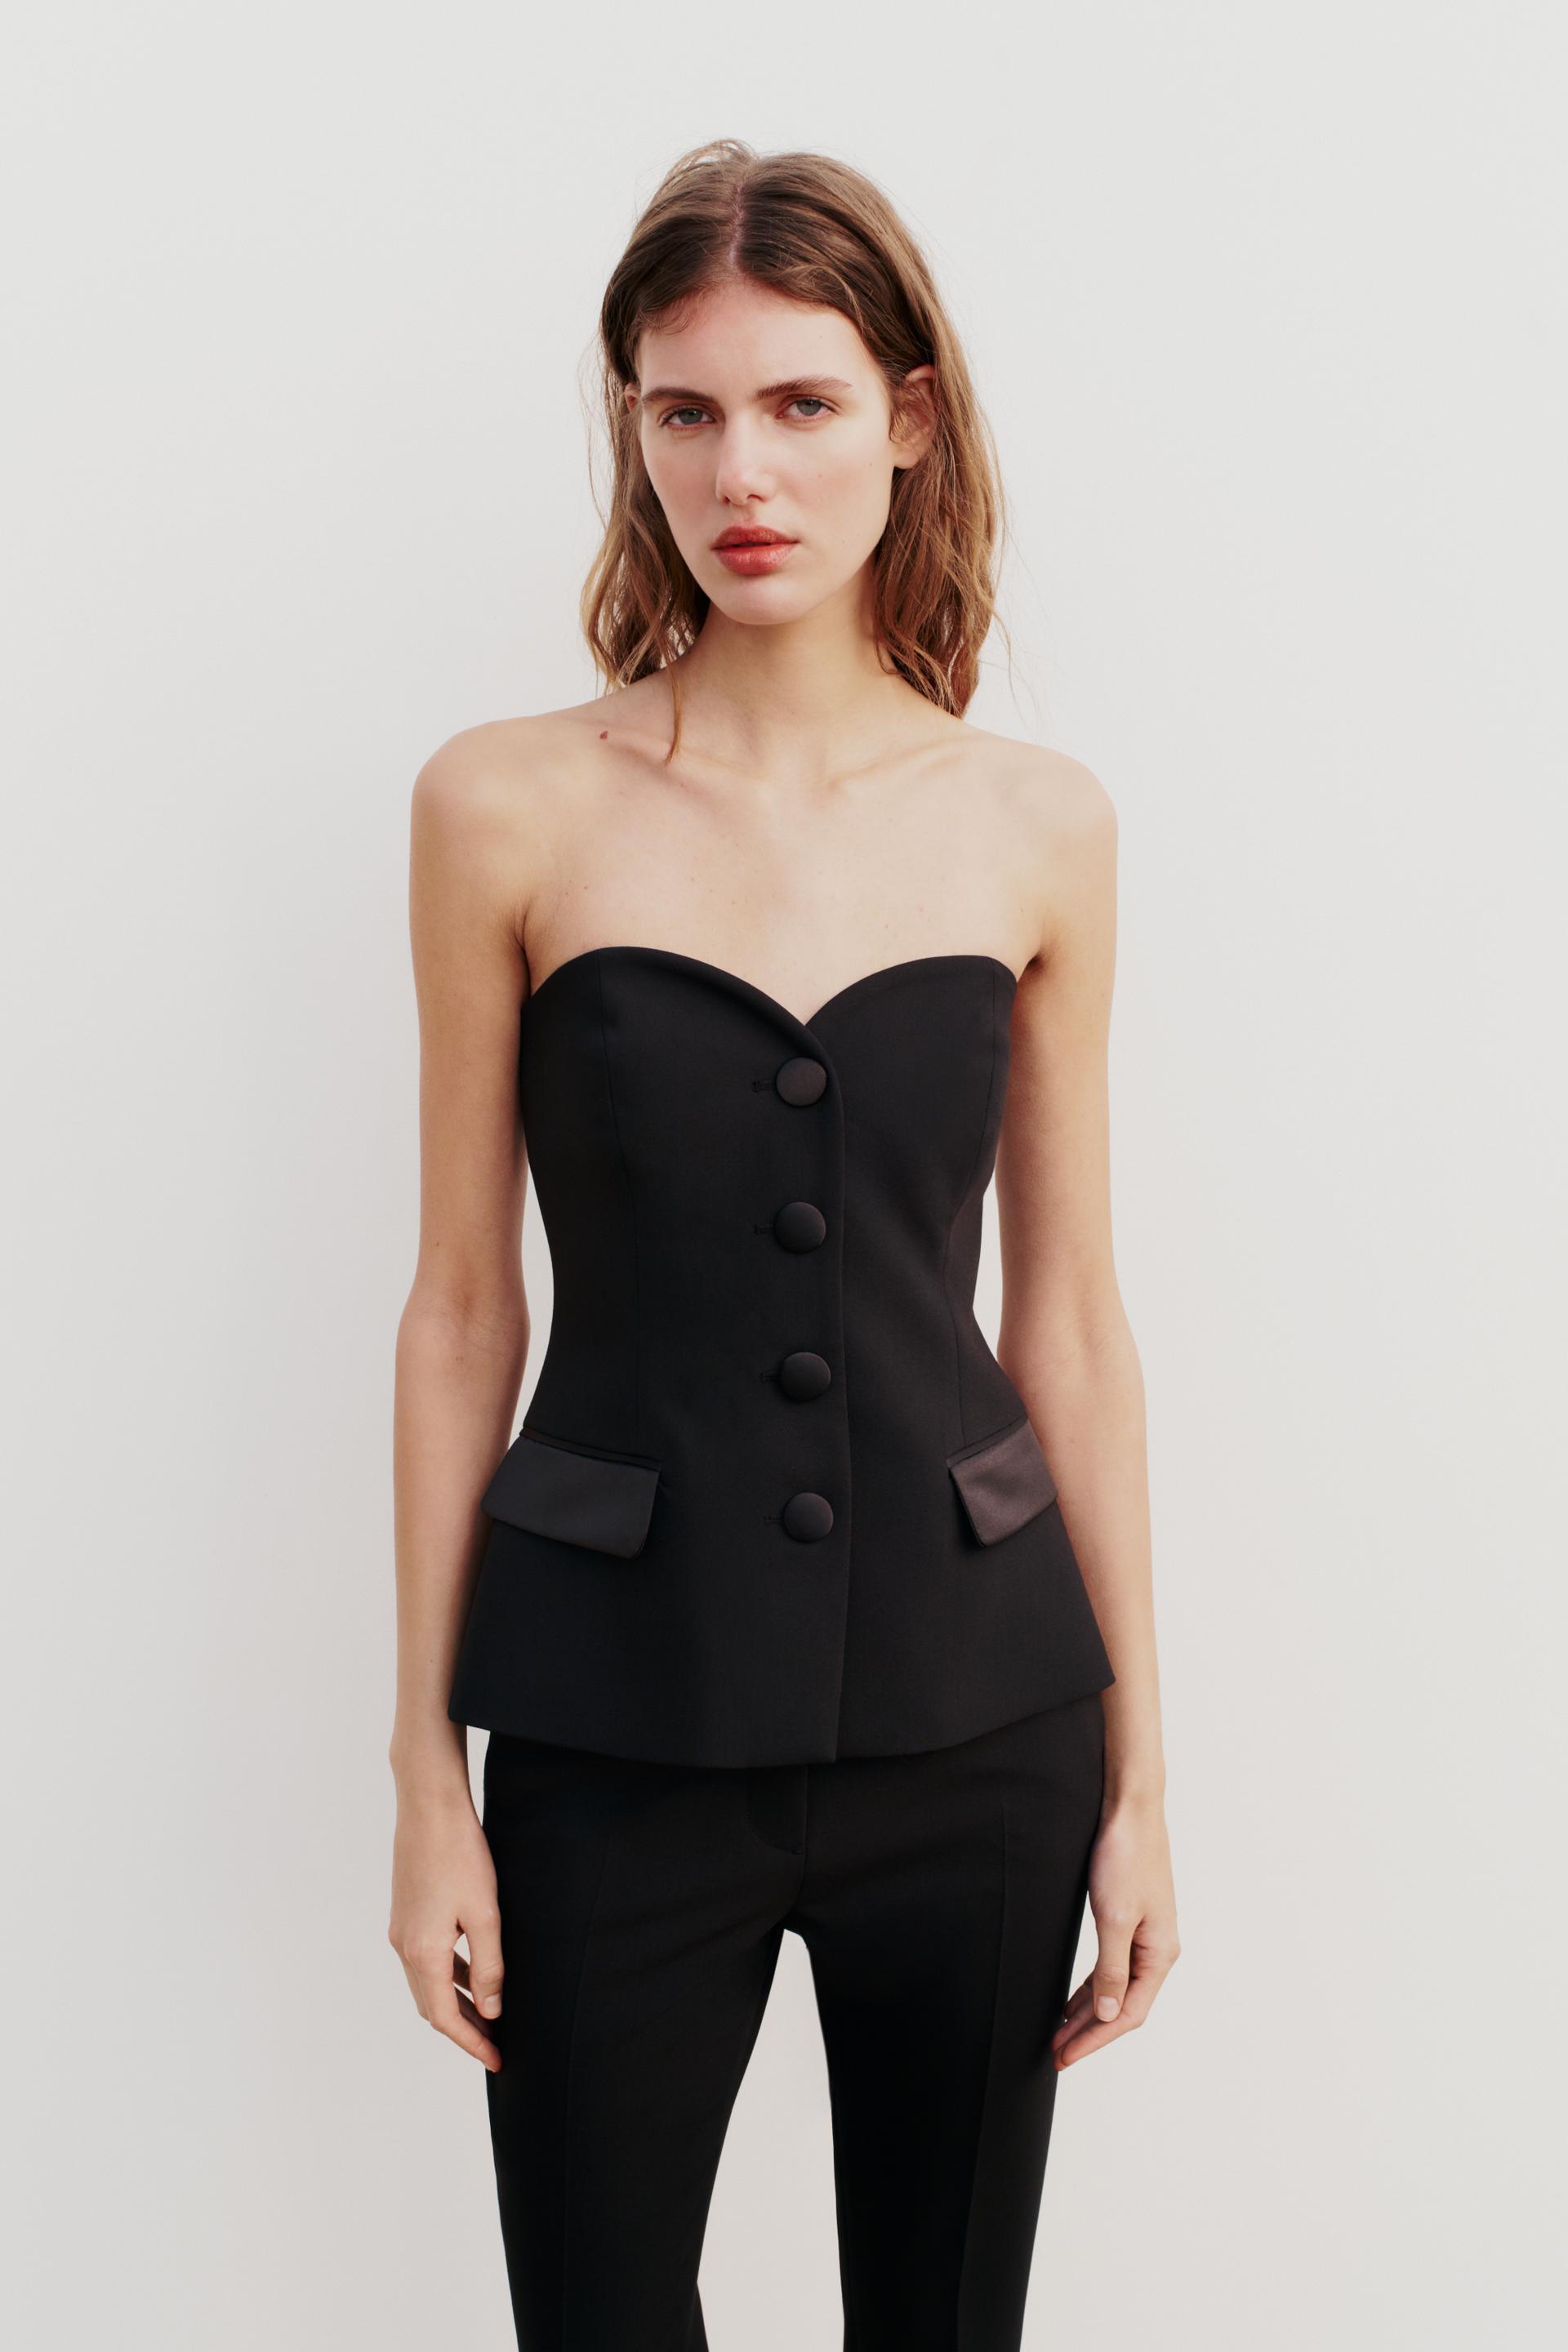 Zara, Tops, New Zara Black Satin Corset Bodysuit